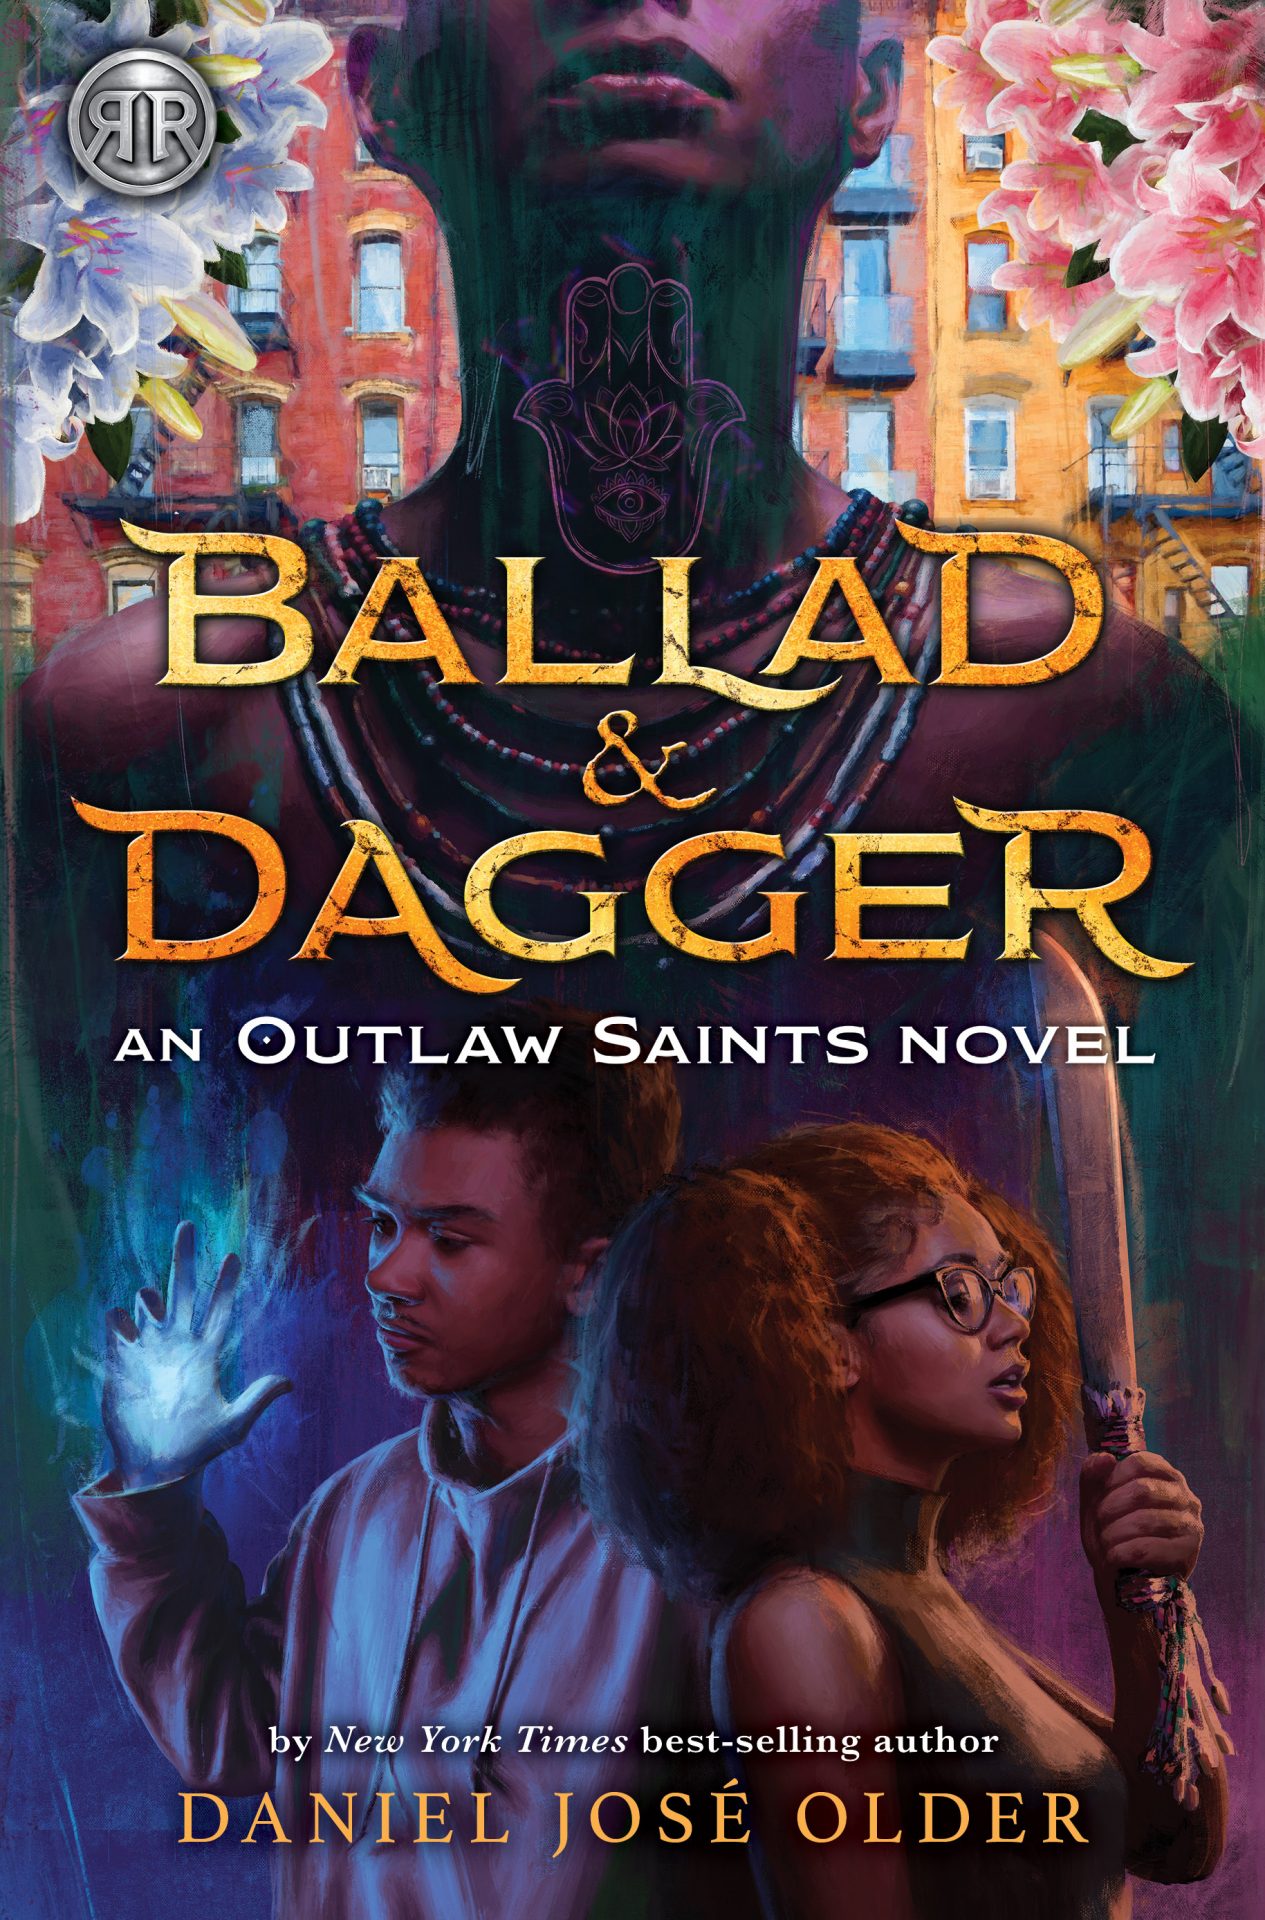 Image for "Rick Riordan Presents Ballad and Dagger (an Outlaw Saints Novel)"